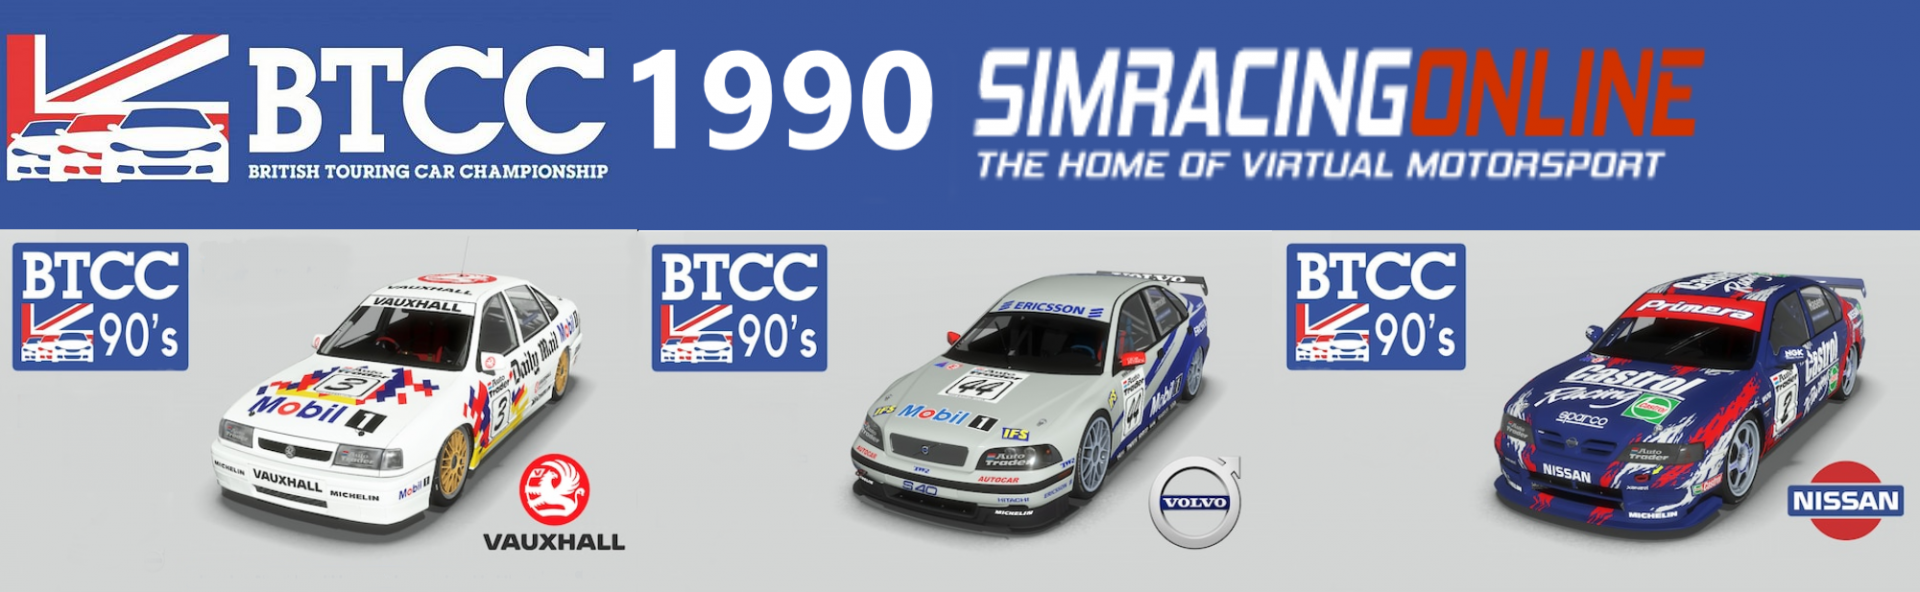 BTCC 1990 banner.png